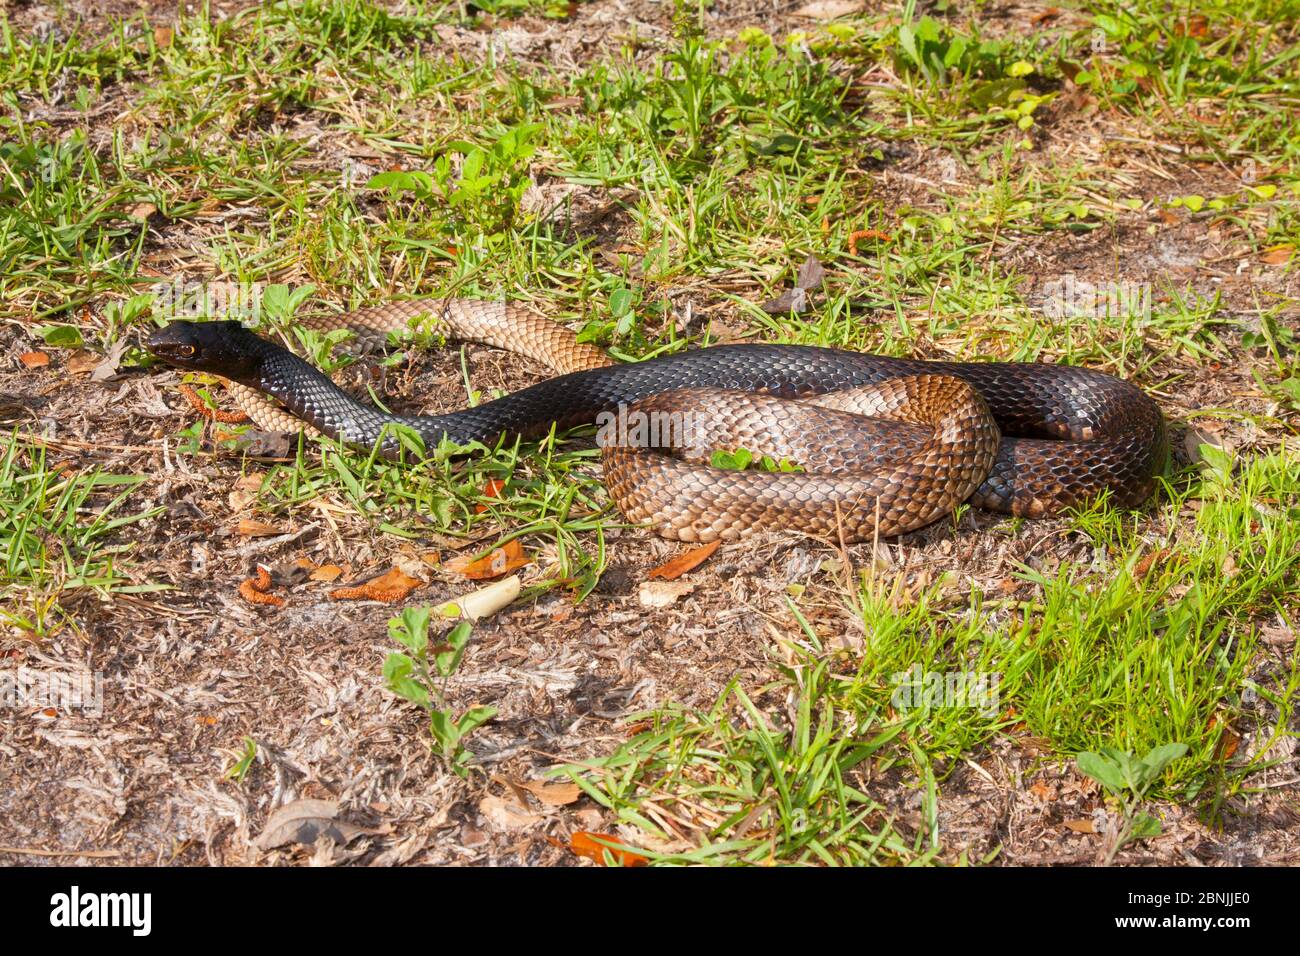 Eastern coachwhip snake (Masticophis flagellum flagellum) North Florida, USA, April. Stock Photo